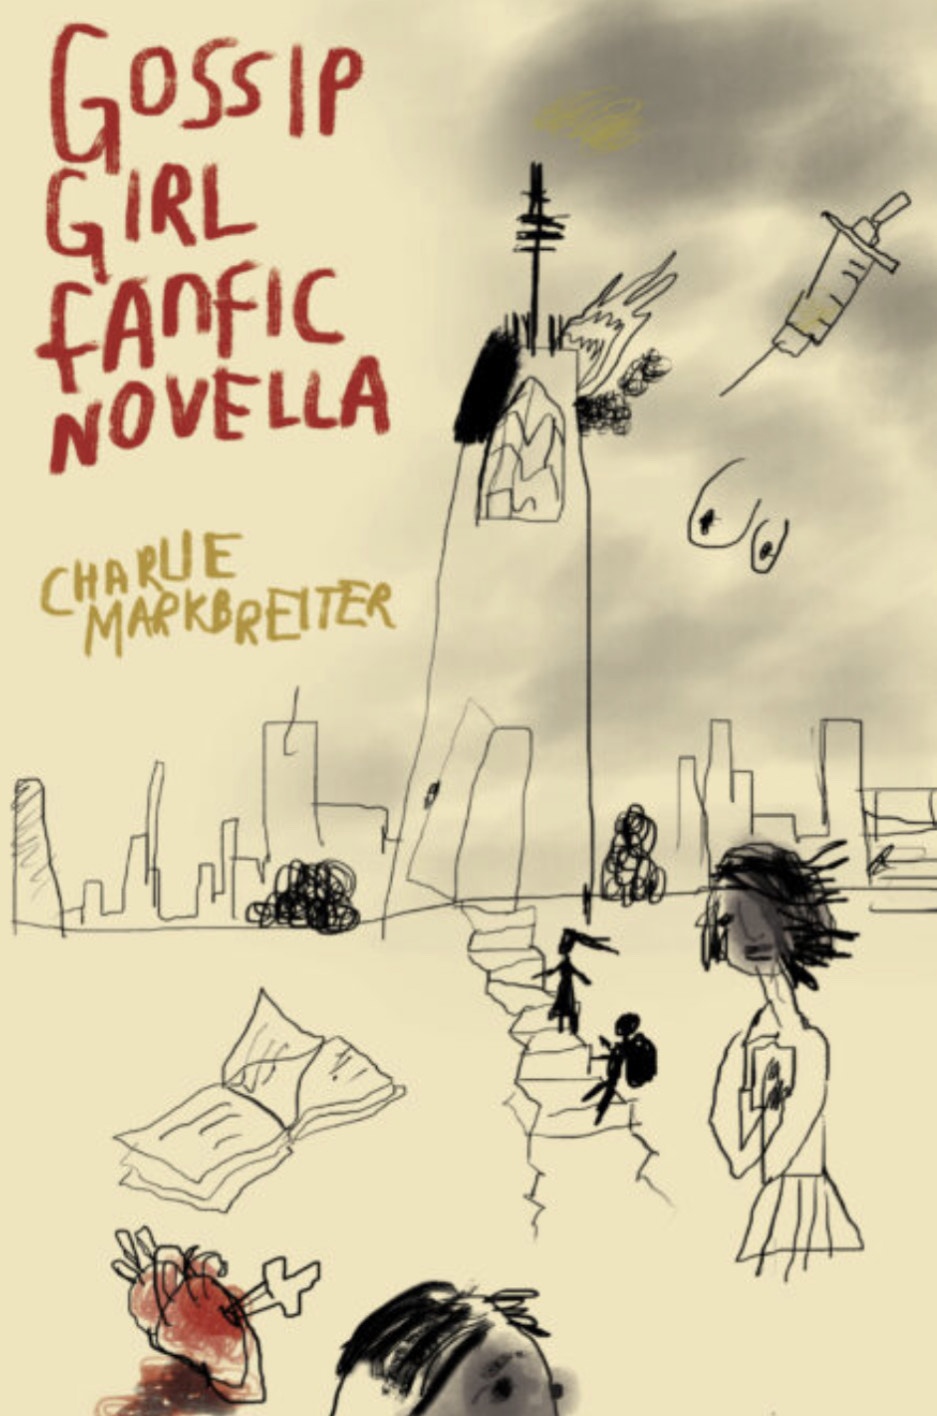 Cover of Charlie Markbreiter’s “Gossip Girl Fanfic Novella,” 2022